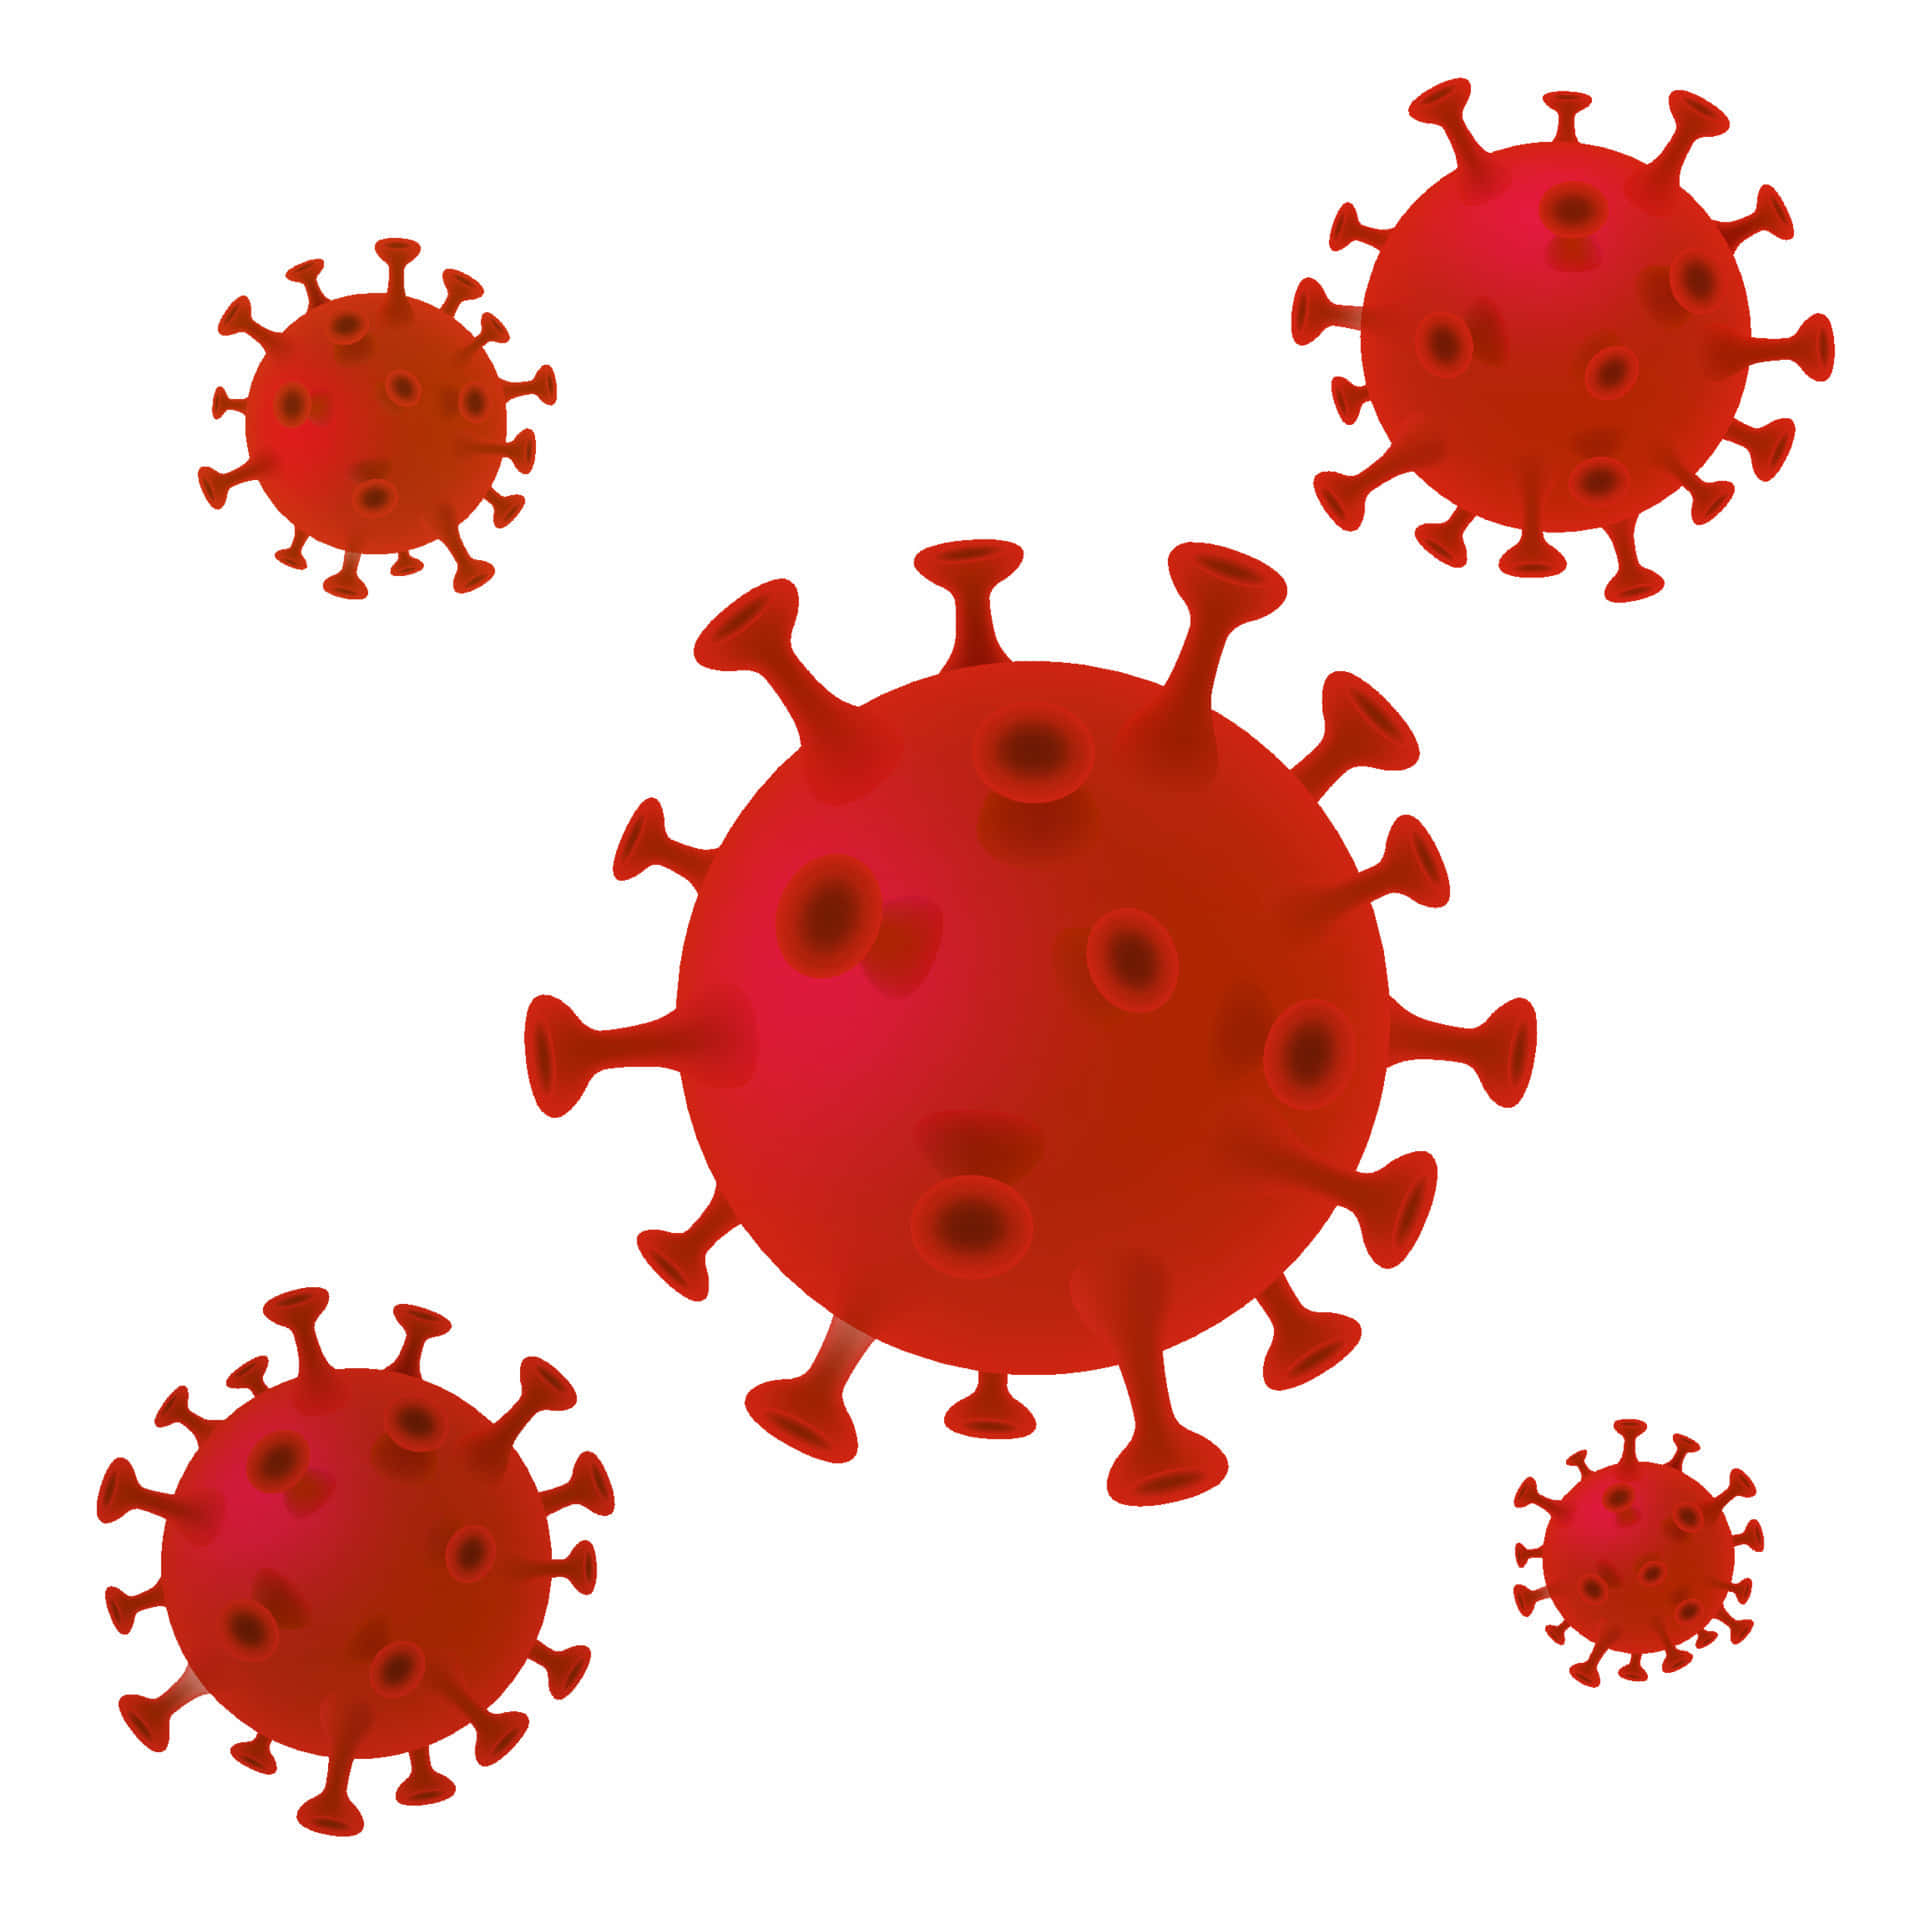 Coronavirusvector | Pris 1 Kredit Usd $1